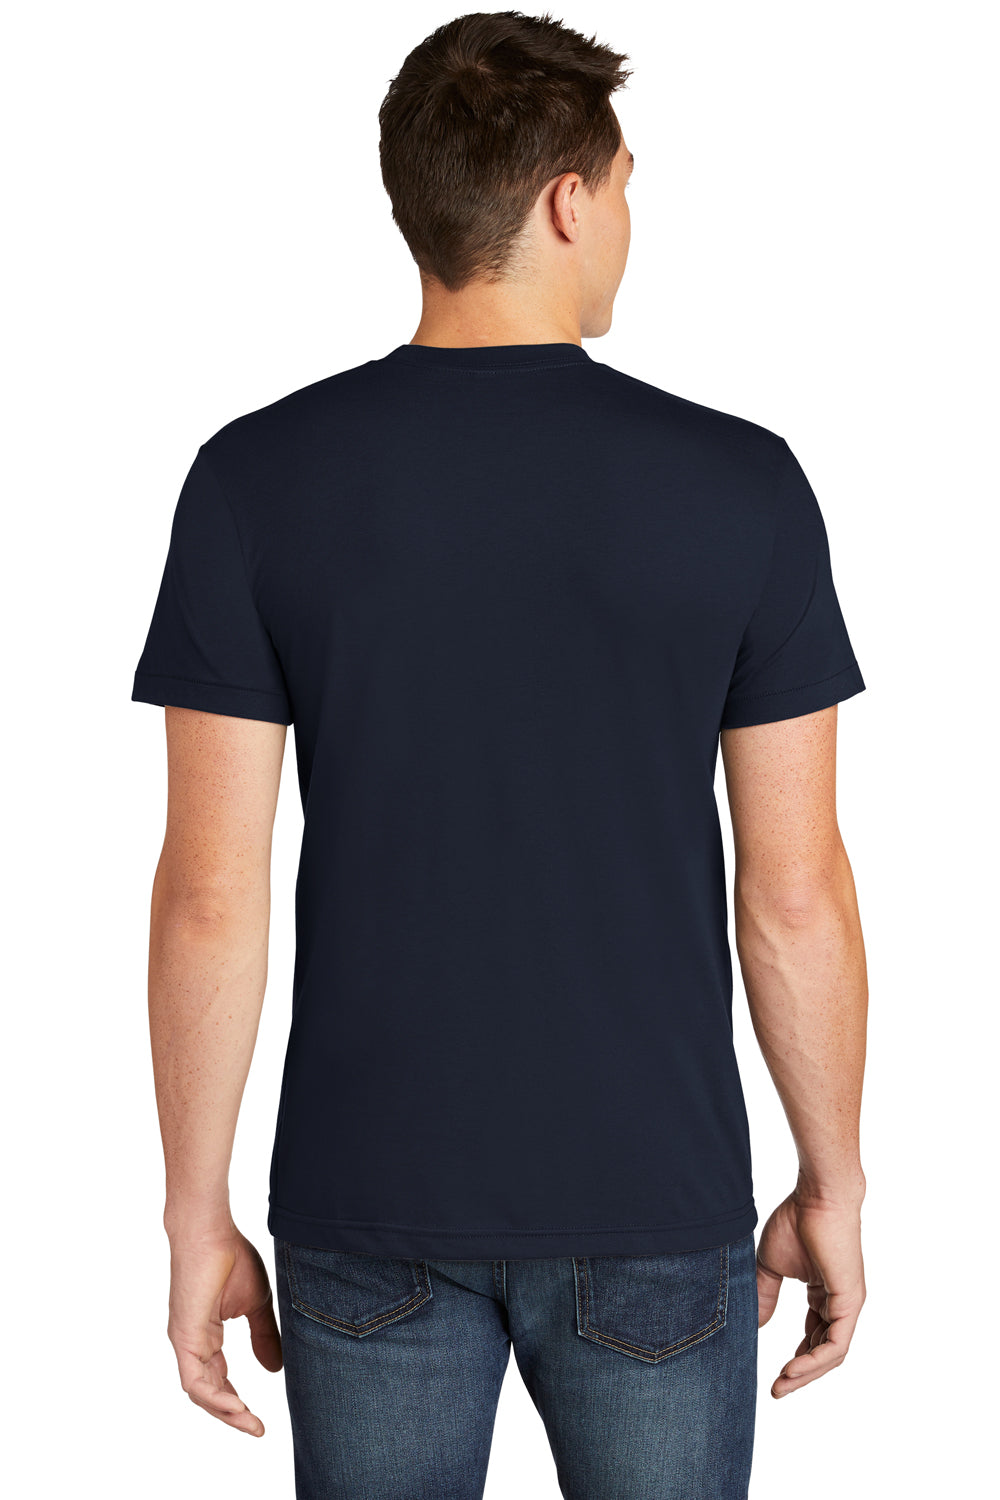 American Apparel BB401W Mens Short Sleeve Crewneck T-Shirt Navy Blue Back